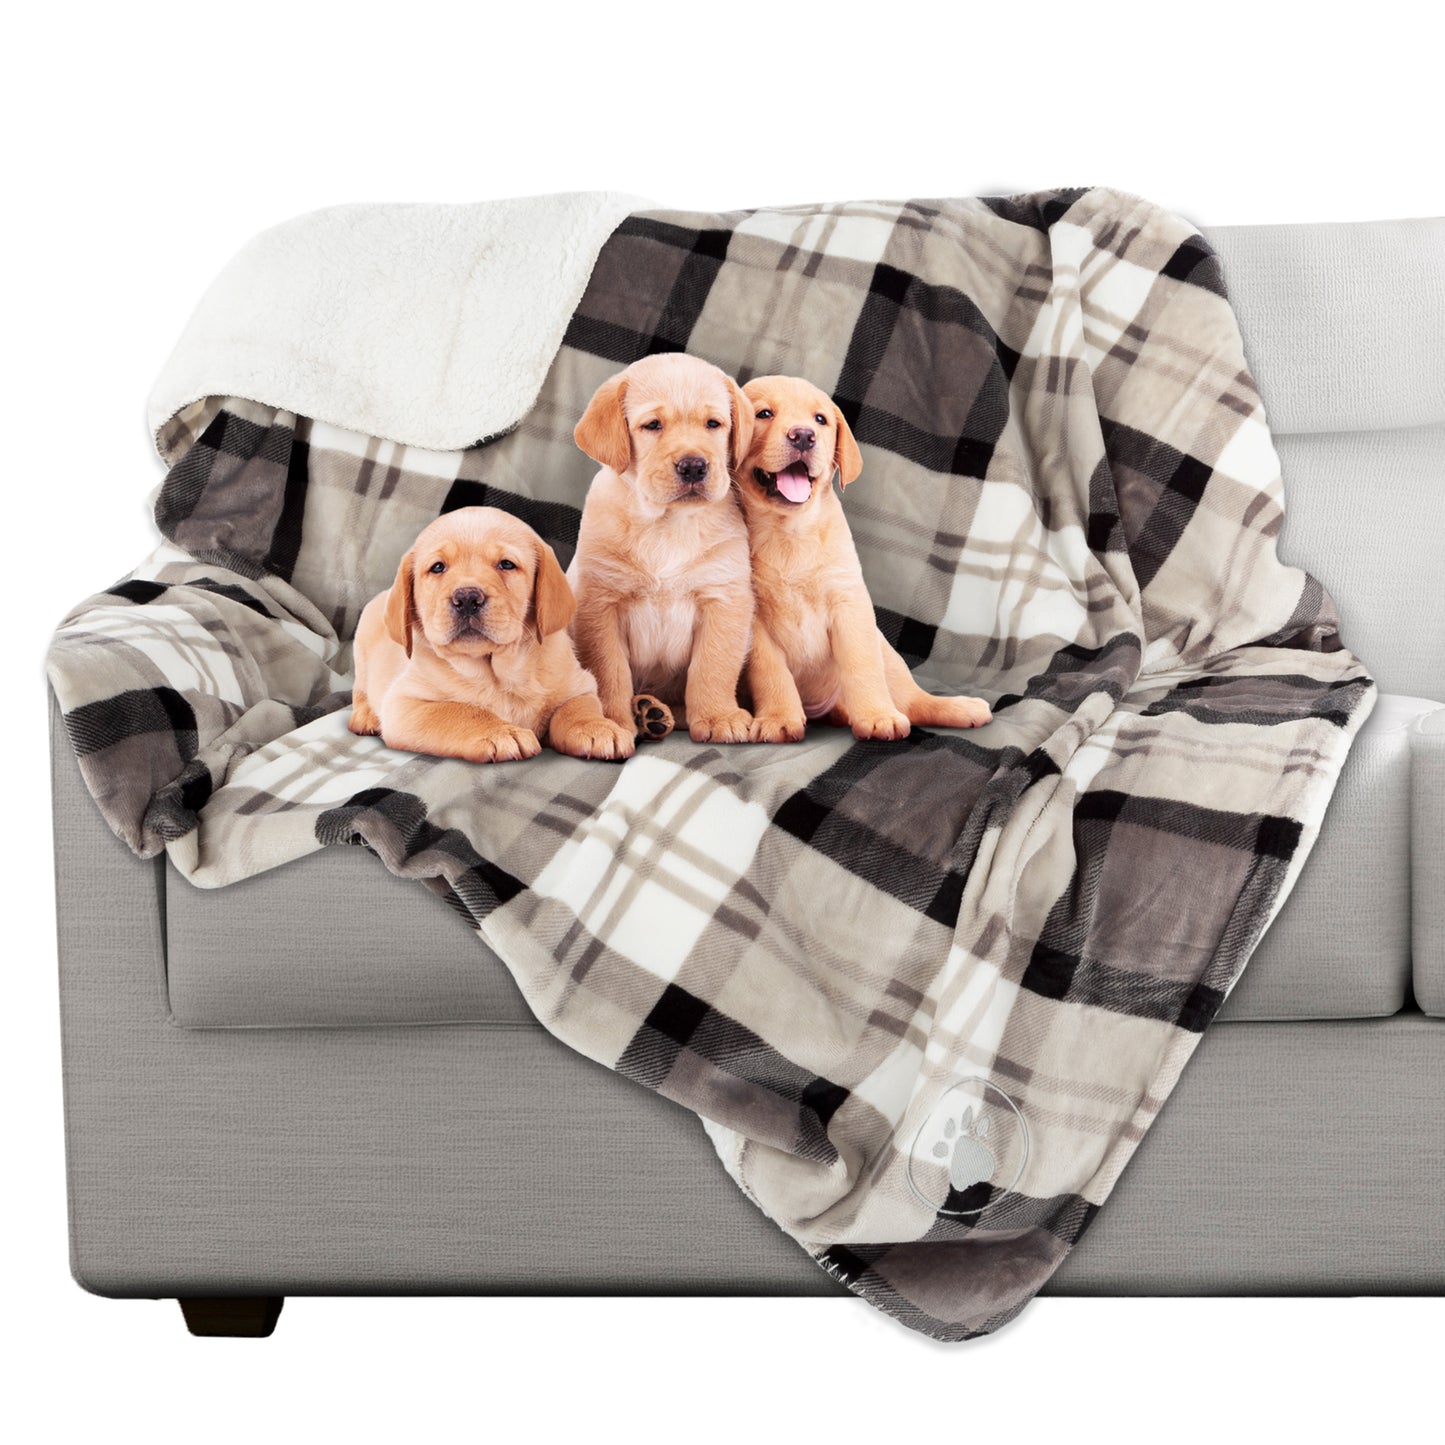 PETMAKER 50x60 Waterproof Dog Blanket, Gray Plaid